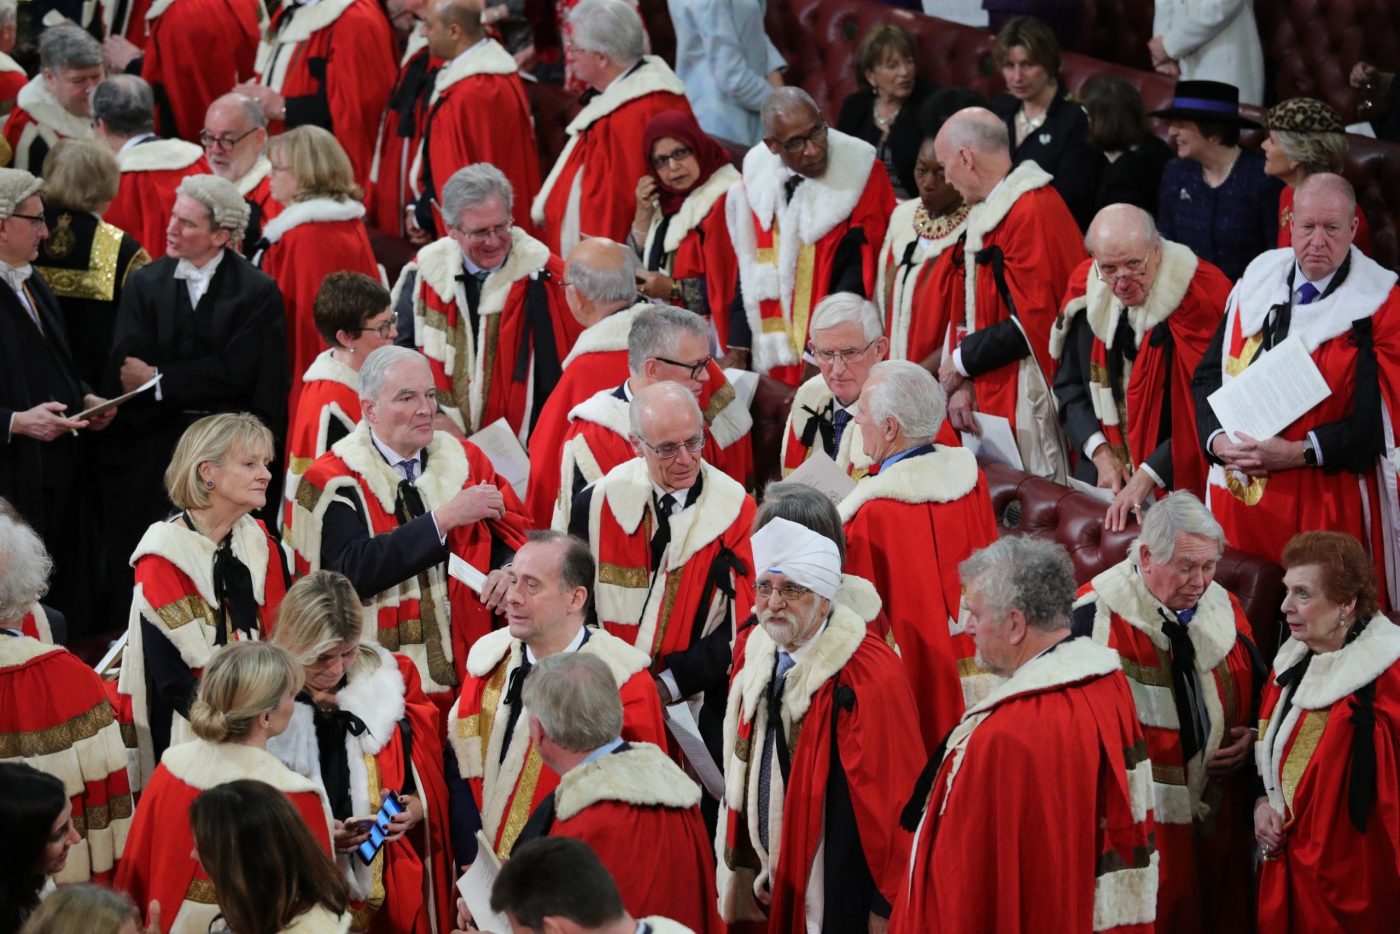 ‘Let daughters inherit peerages’, Tory MP says